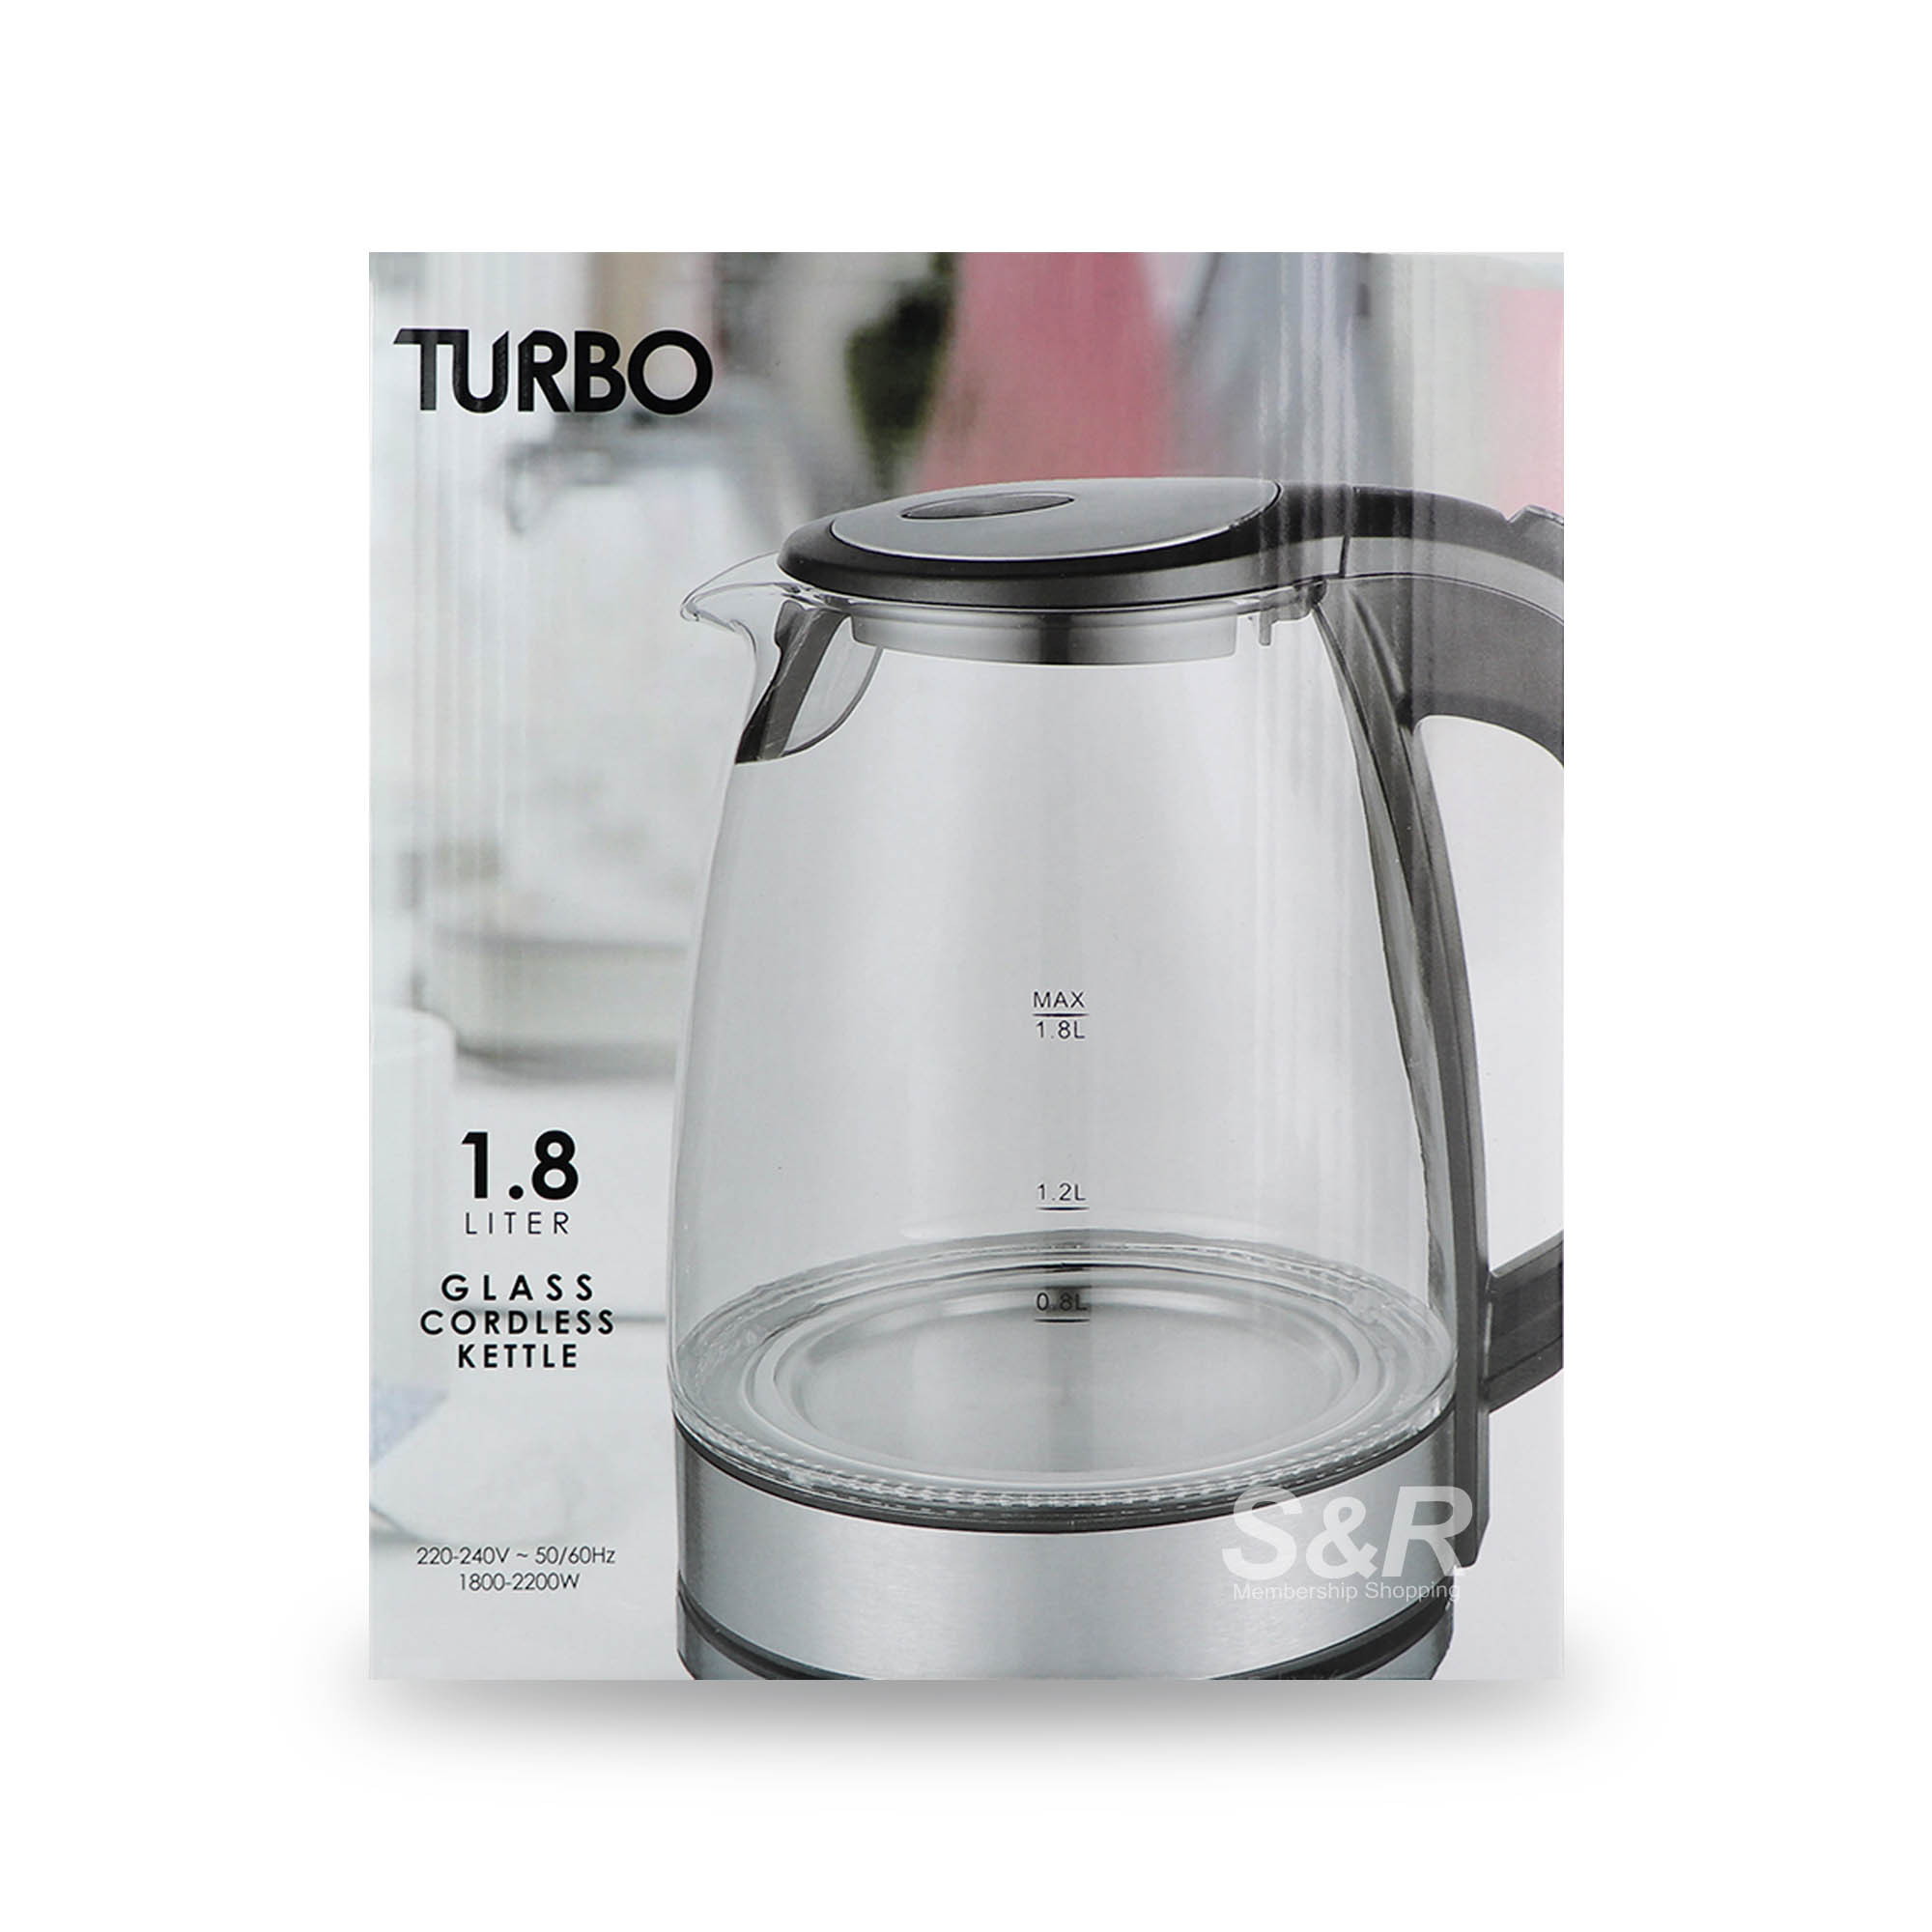 Turbo 1.8L Glass Cordless Kettle 1pc